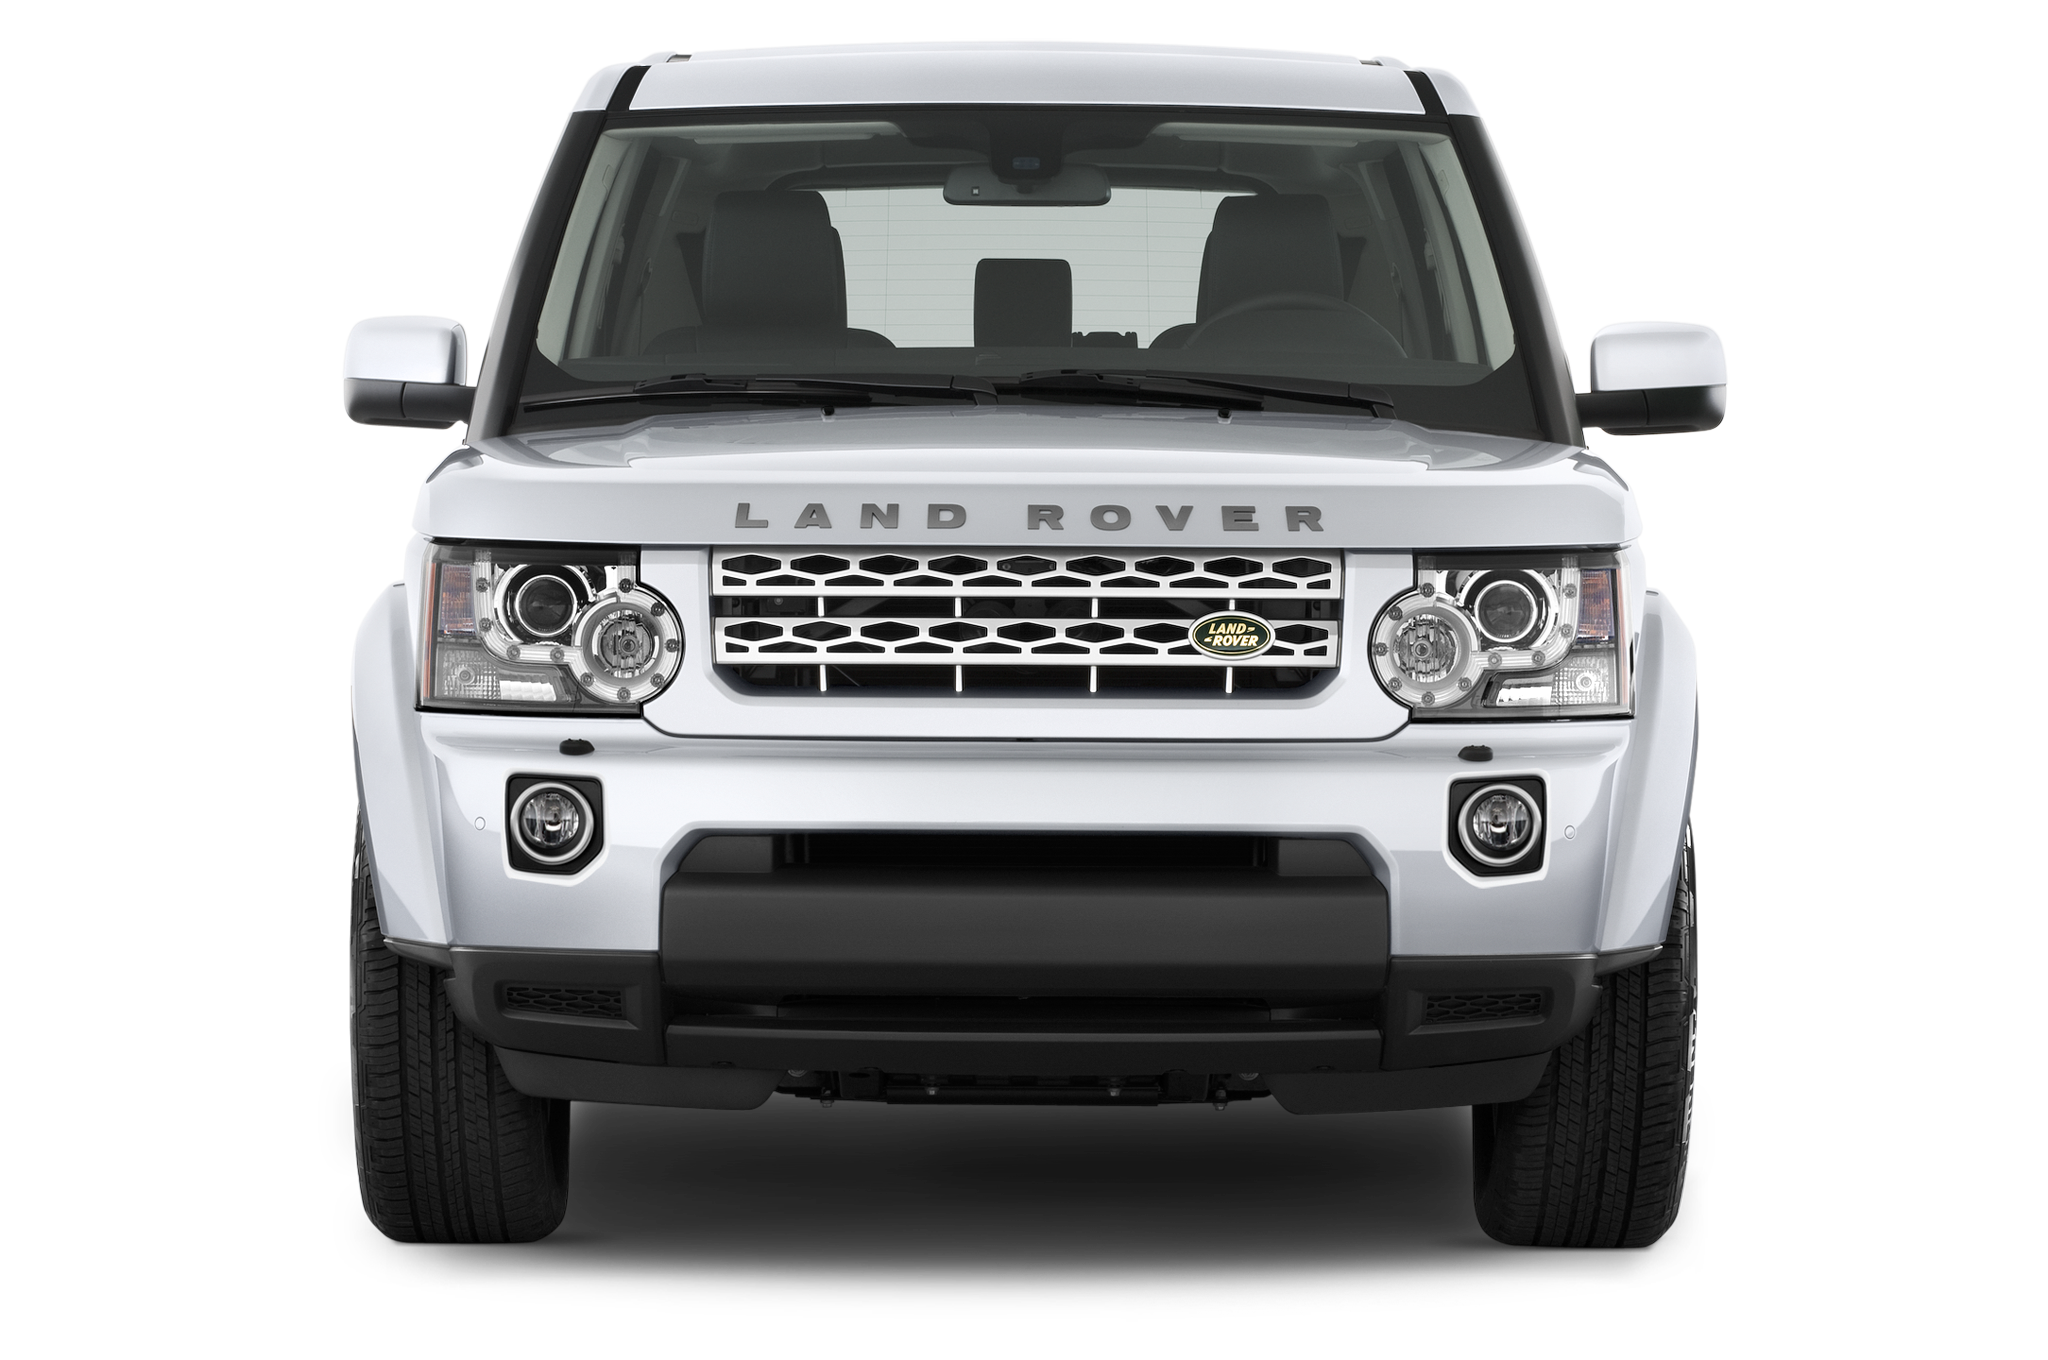 Land Rover Transparent Images